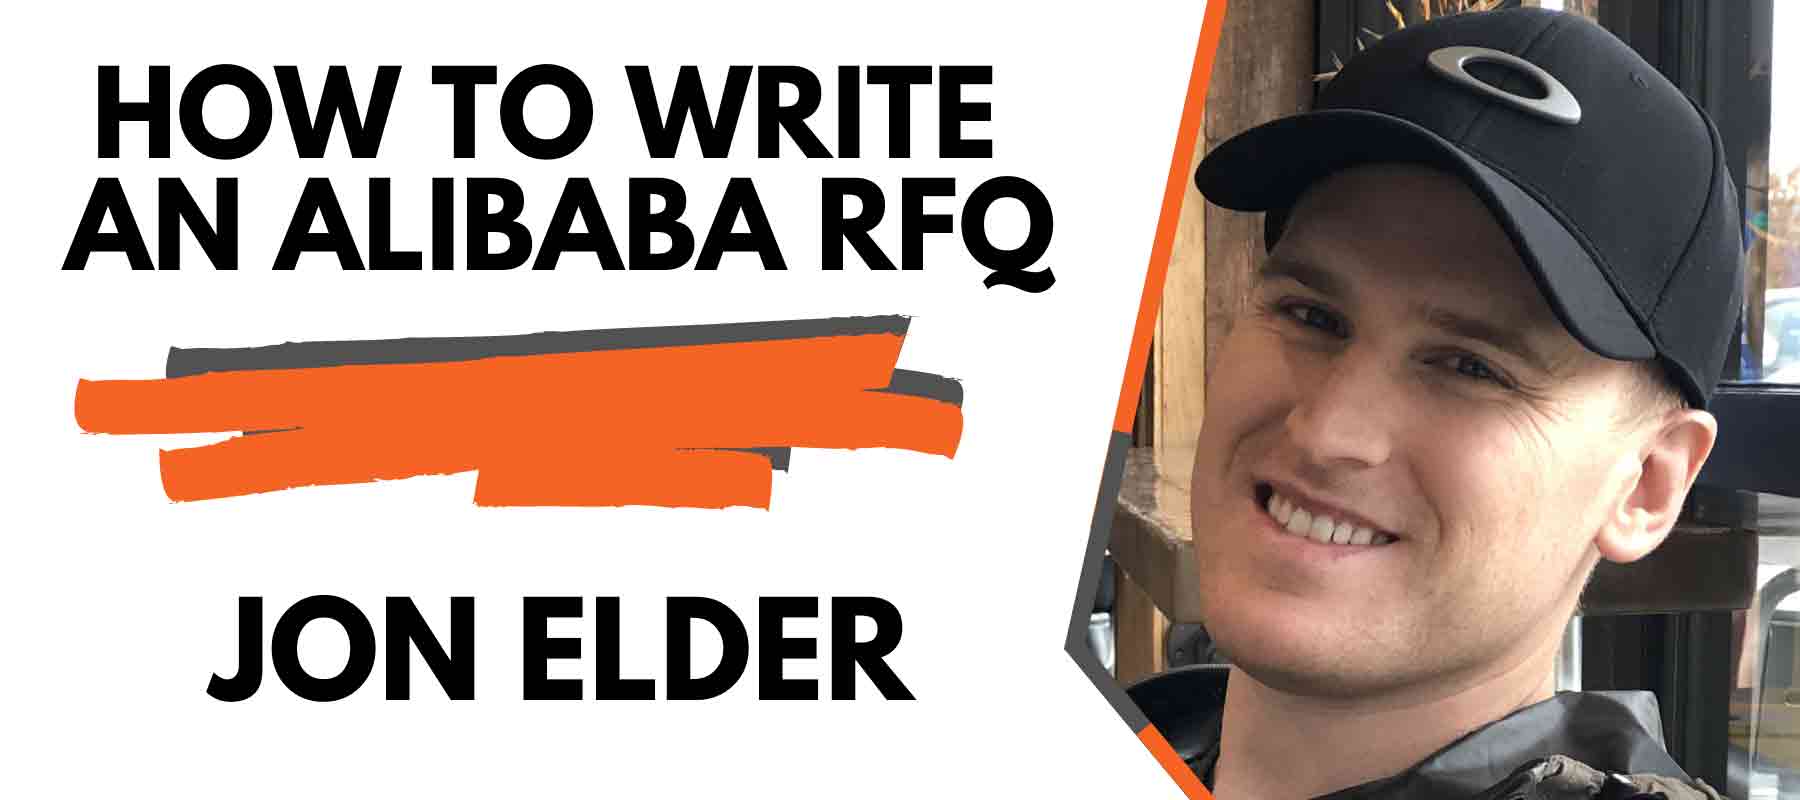 Write an Alibaba RFQ - Jon Elder